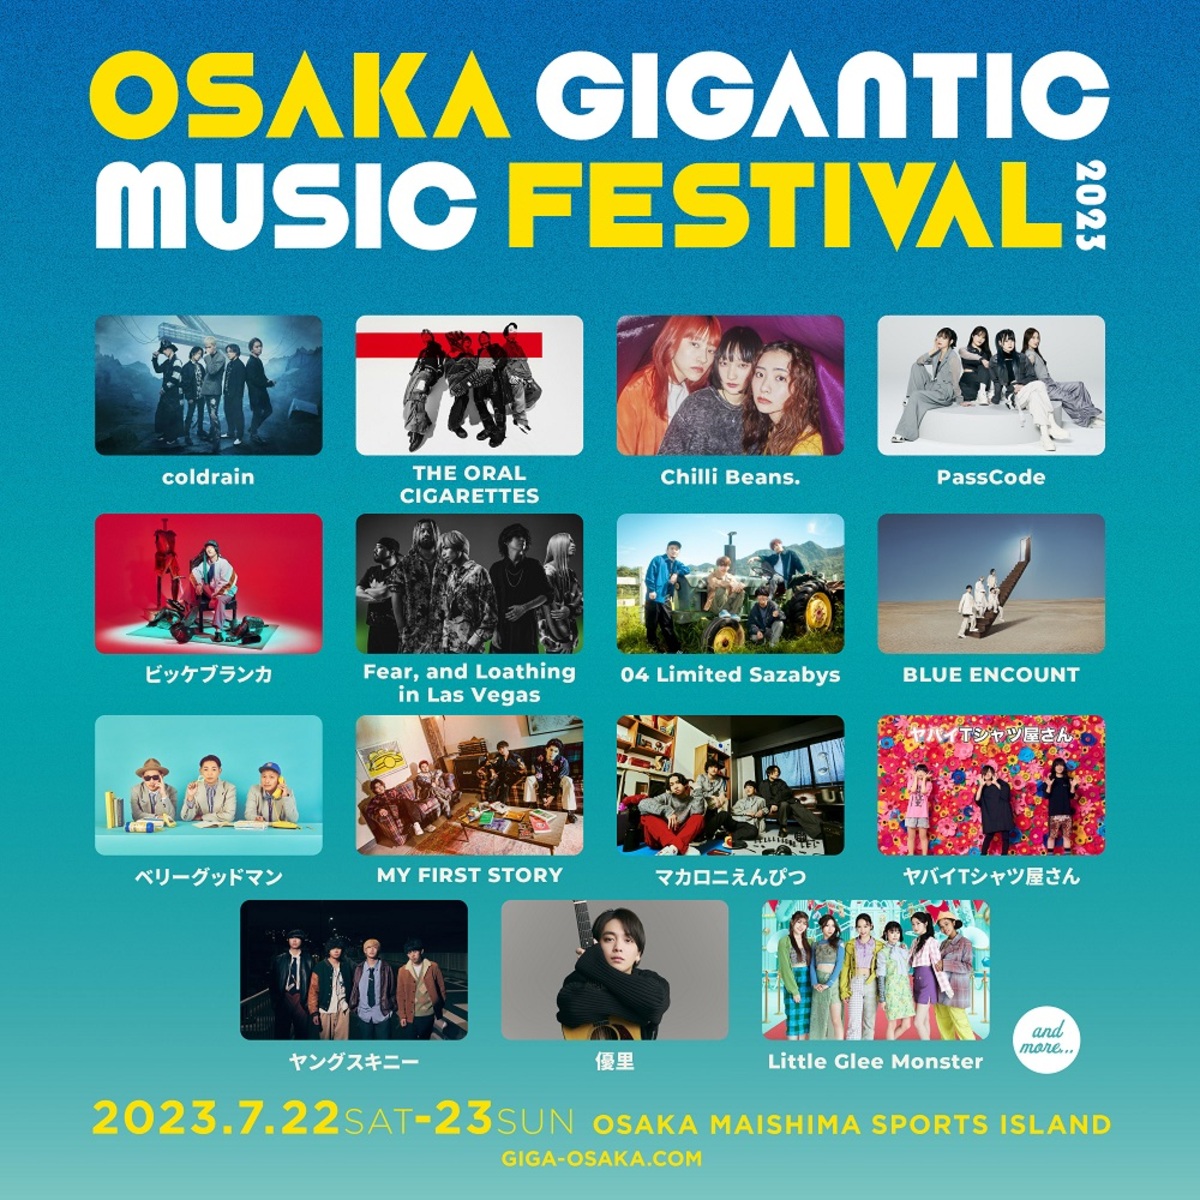 "OSAKA GIGANTIC MUSIC FESTIVAL 2023"、第1弾出演アーティストでcoldrain、ラスベガス